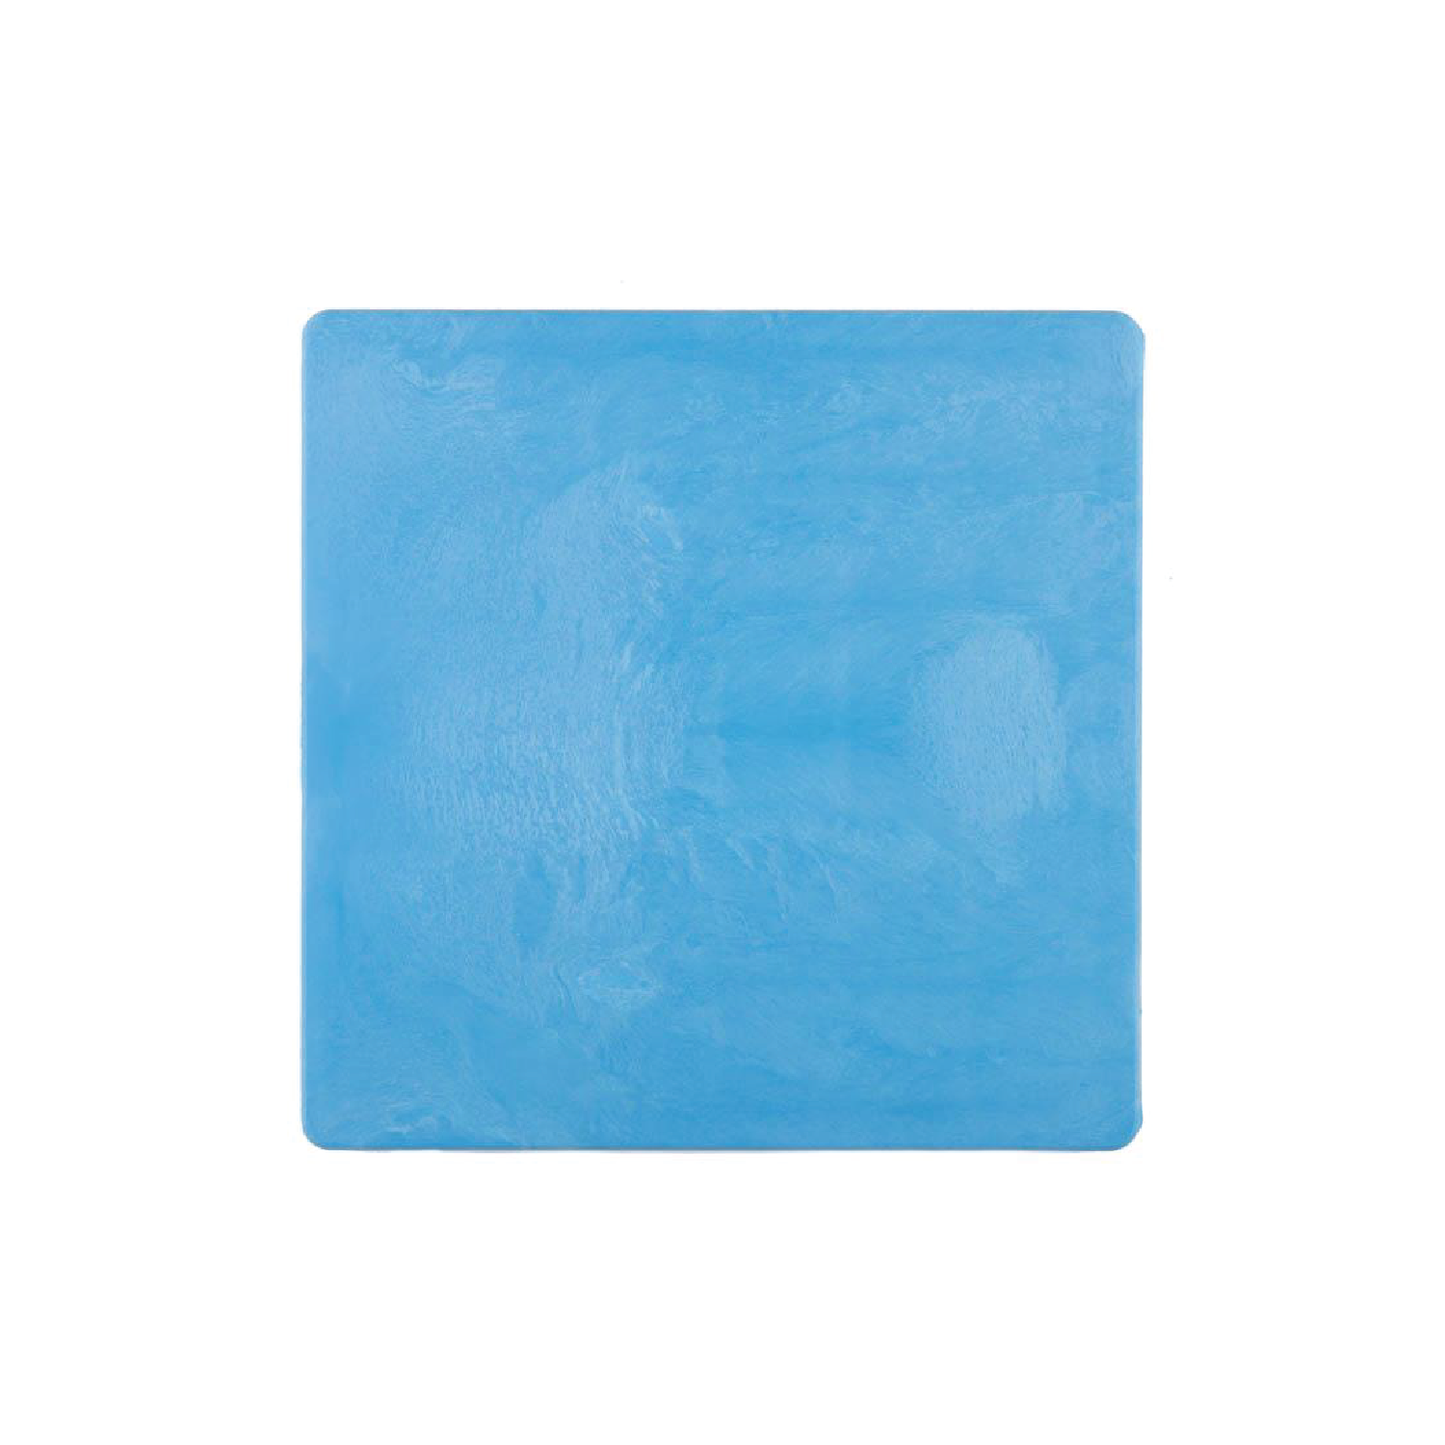 Speedball Plastic Bat - 7.5" Square Blue (BB75)